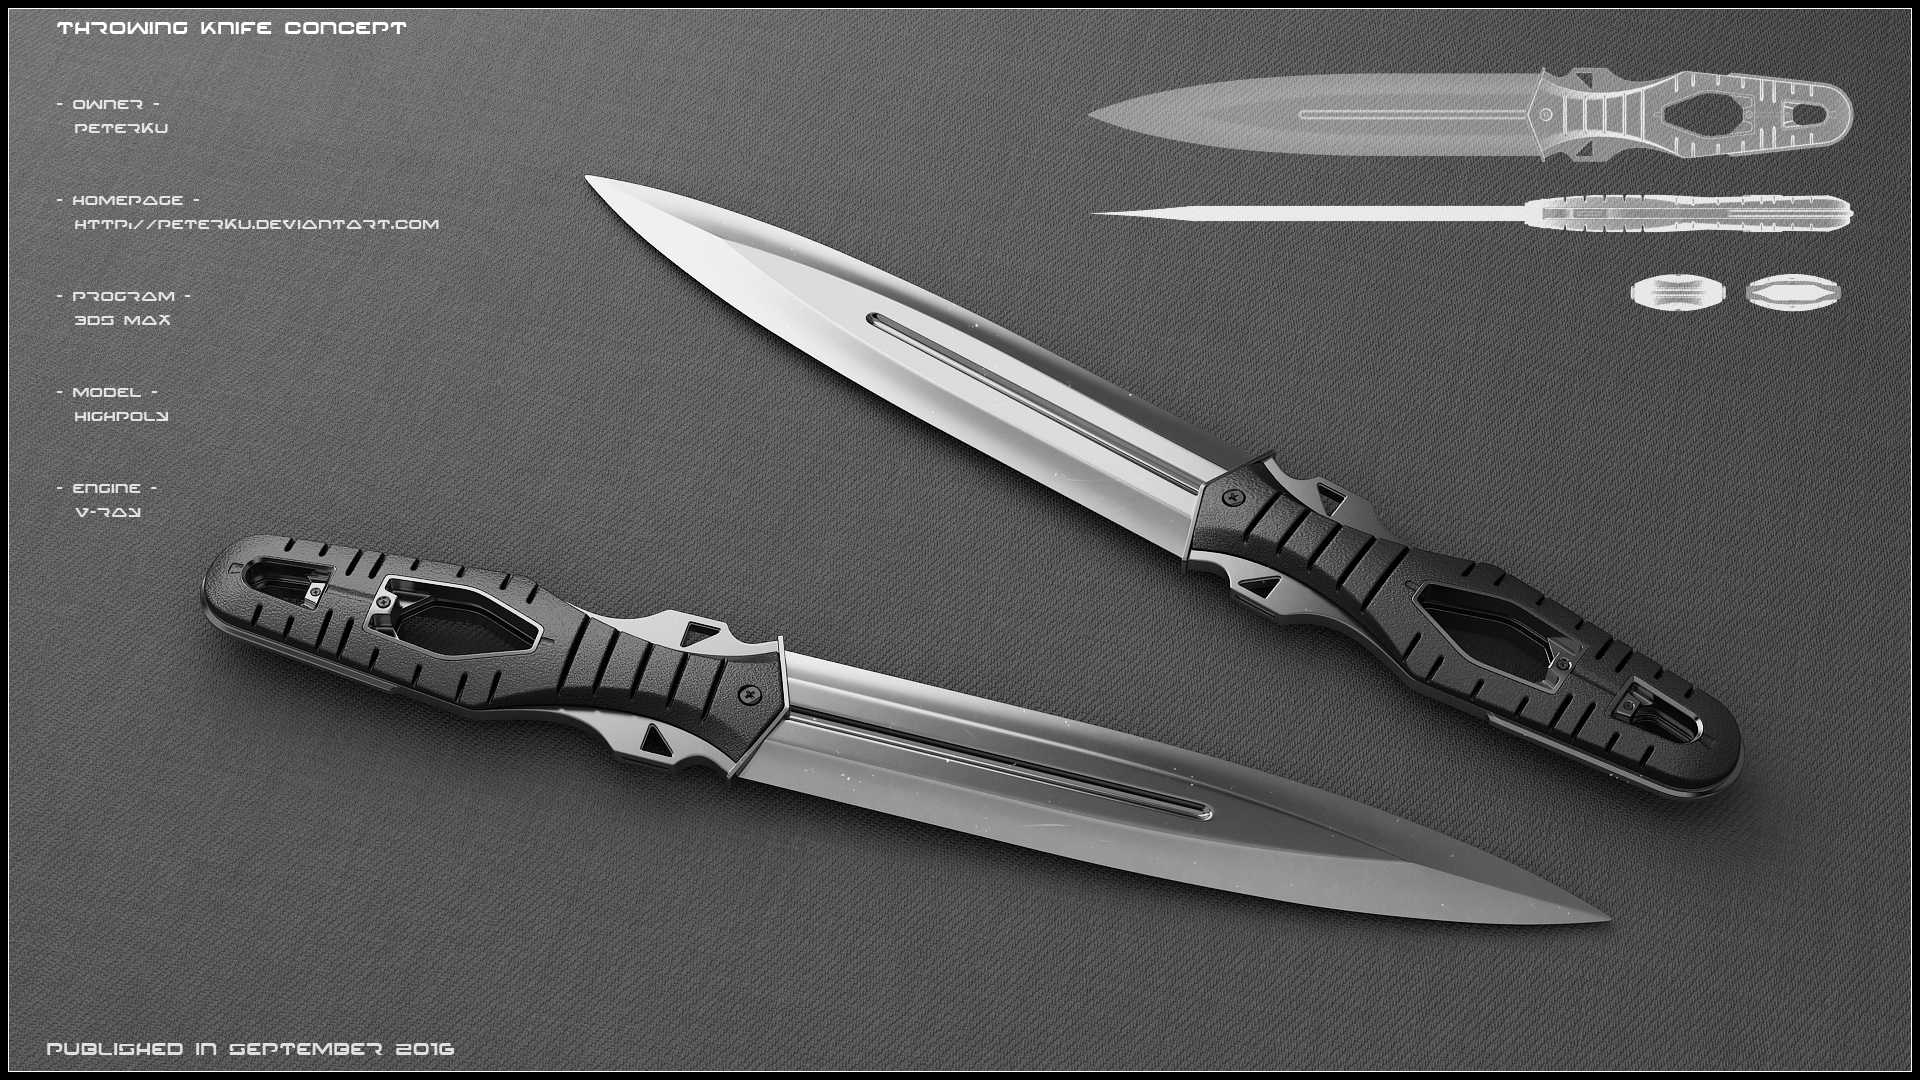 Throwing knife concept by peterku on DeviantArt